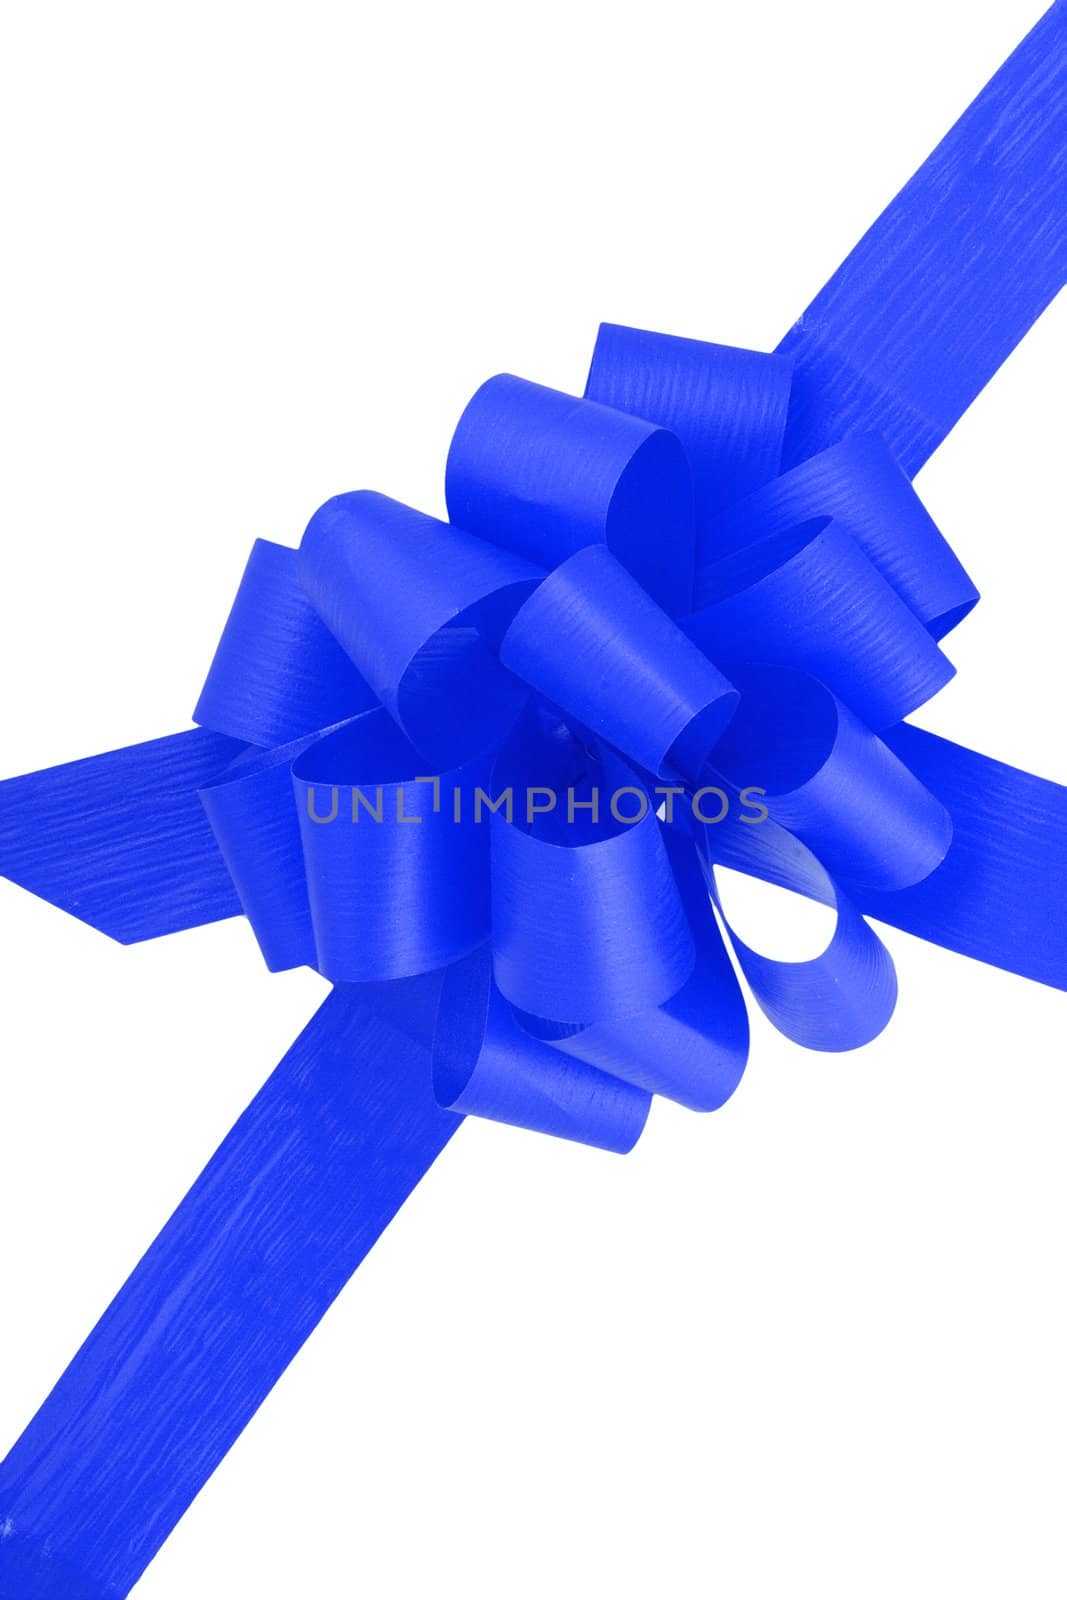 Blue Ribbon by werg